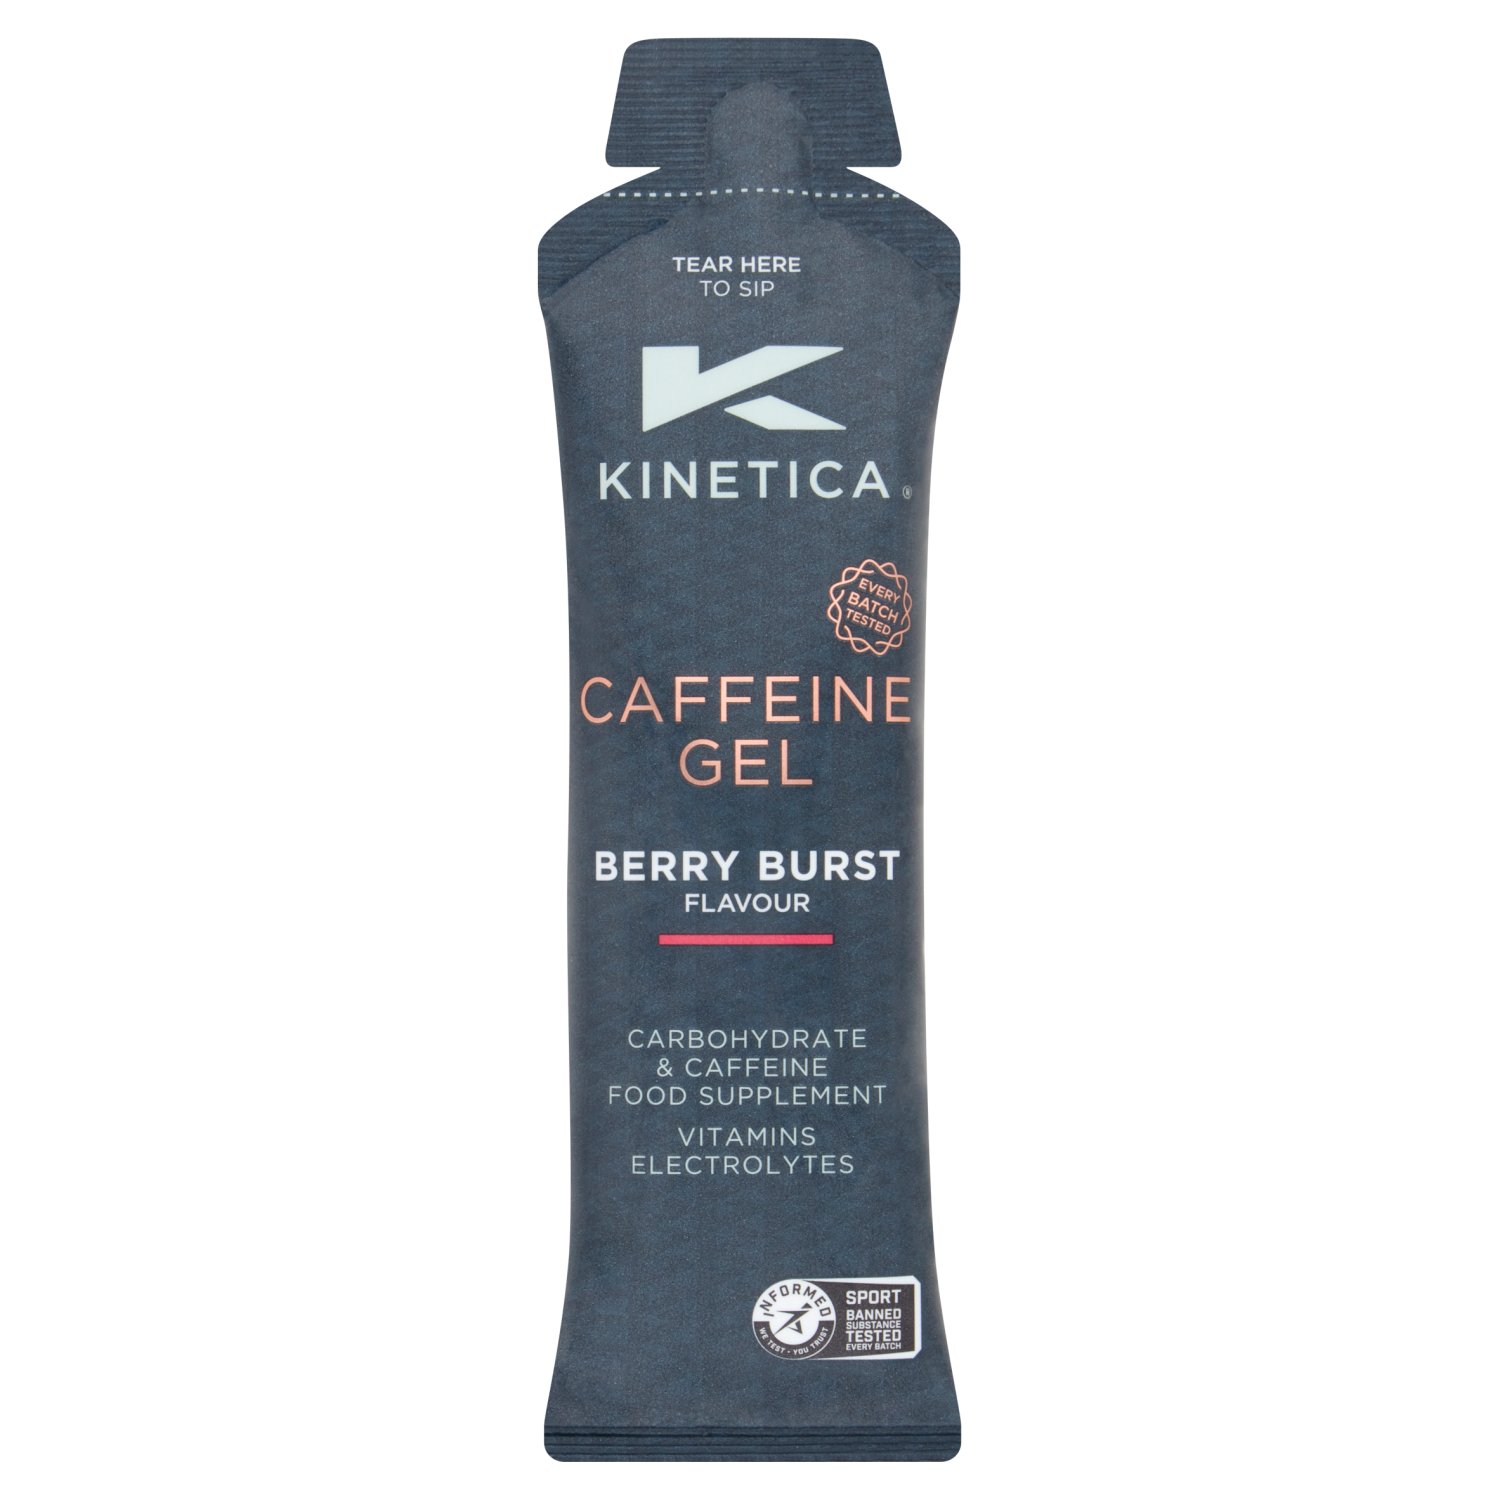 Kinetica Caffeine Gel Berry Burst Flavour (70 g)